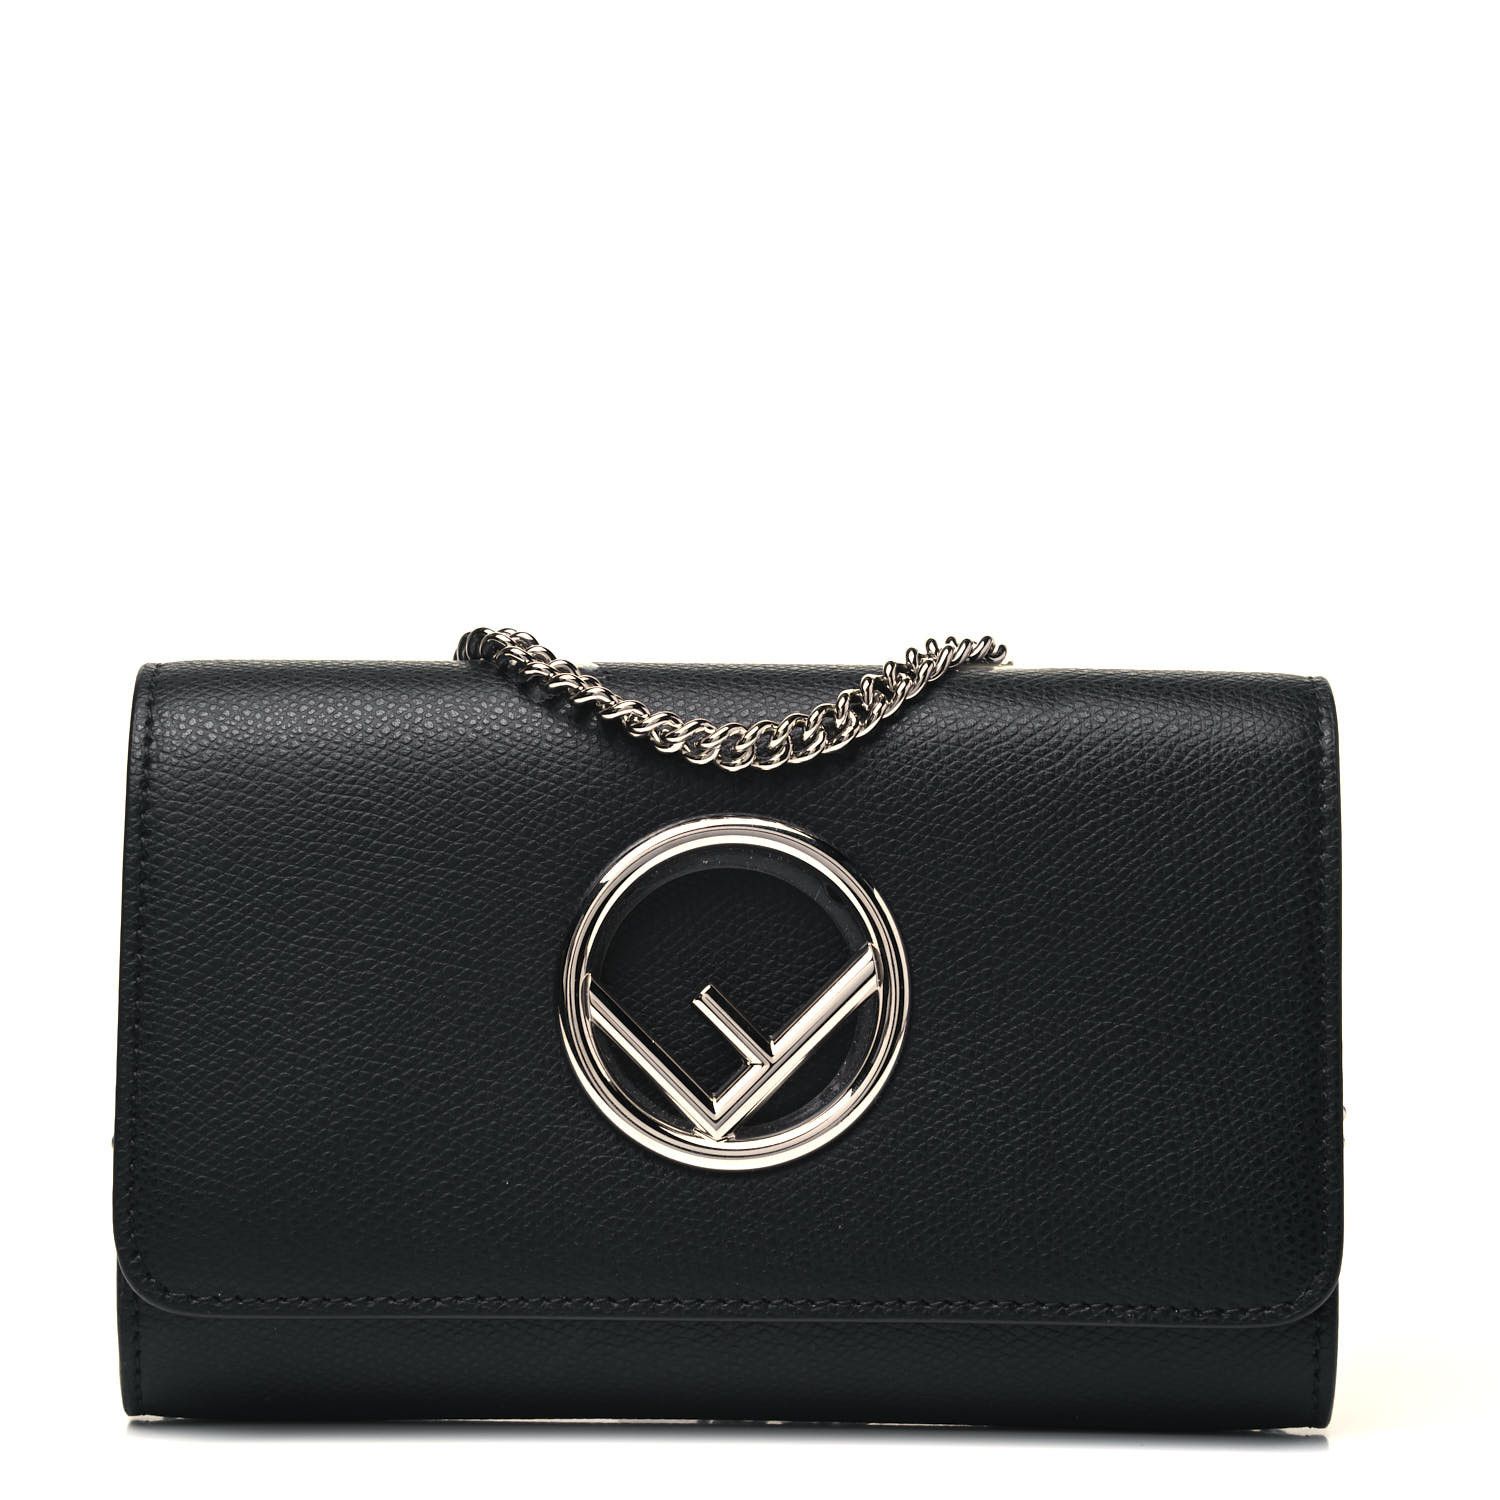 FENDI Grained Calfskin F is Fendi Wallet on Chain Black | FASHIONPHILE | Fashionphile